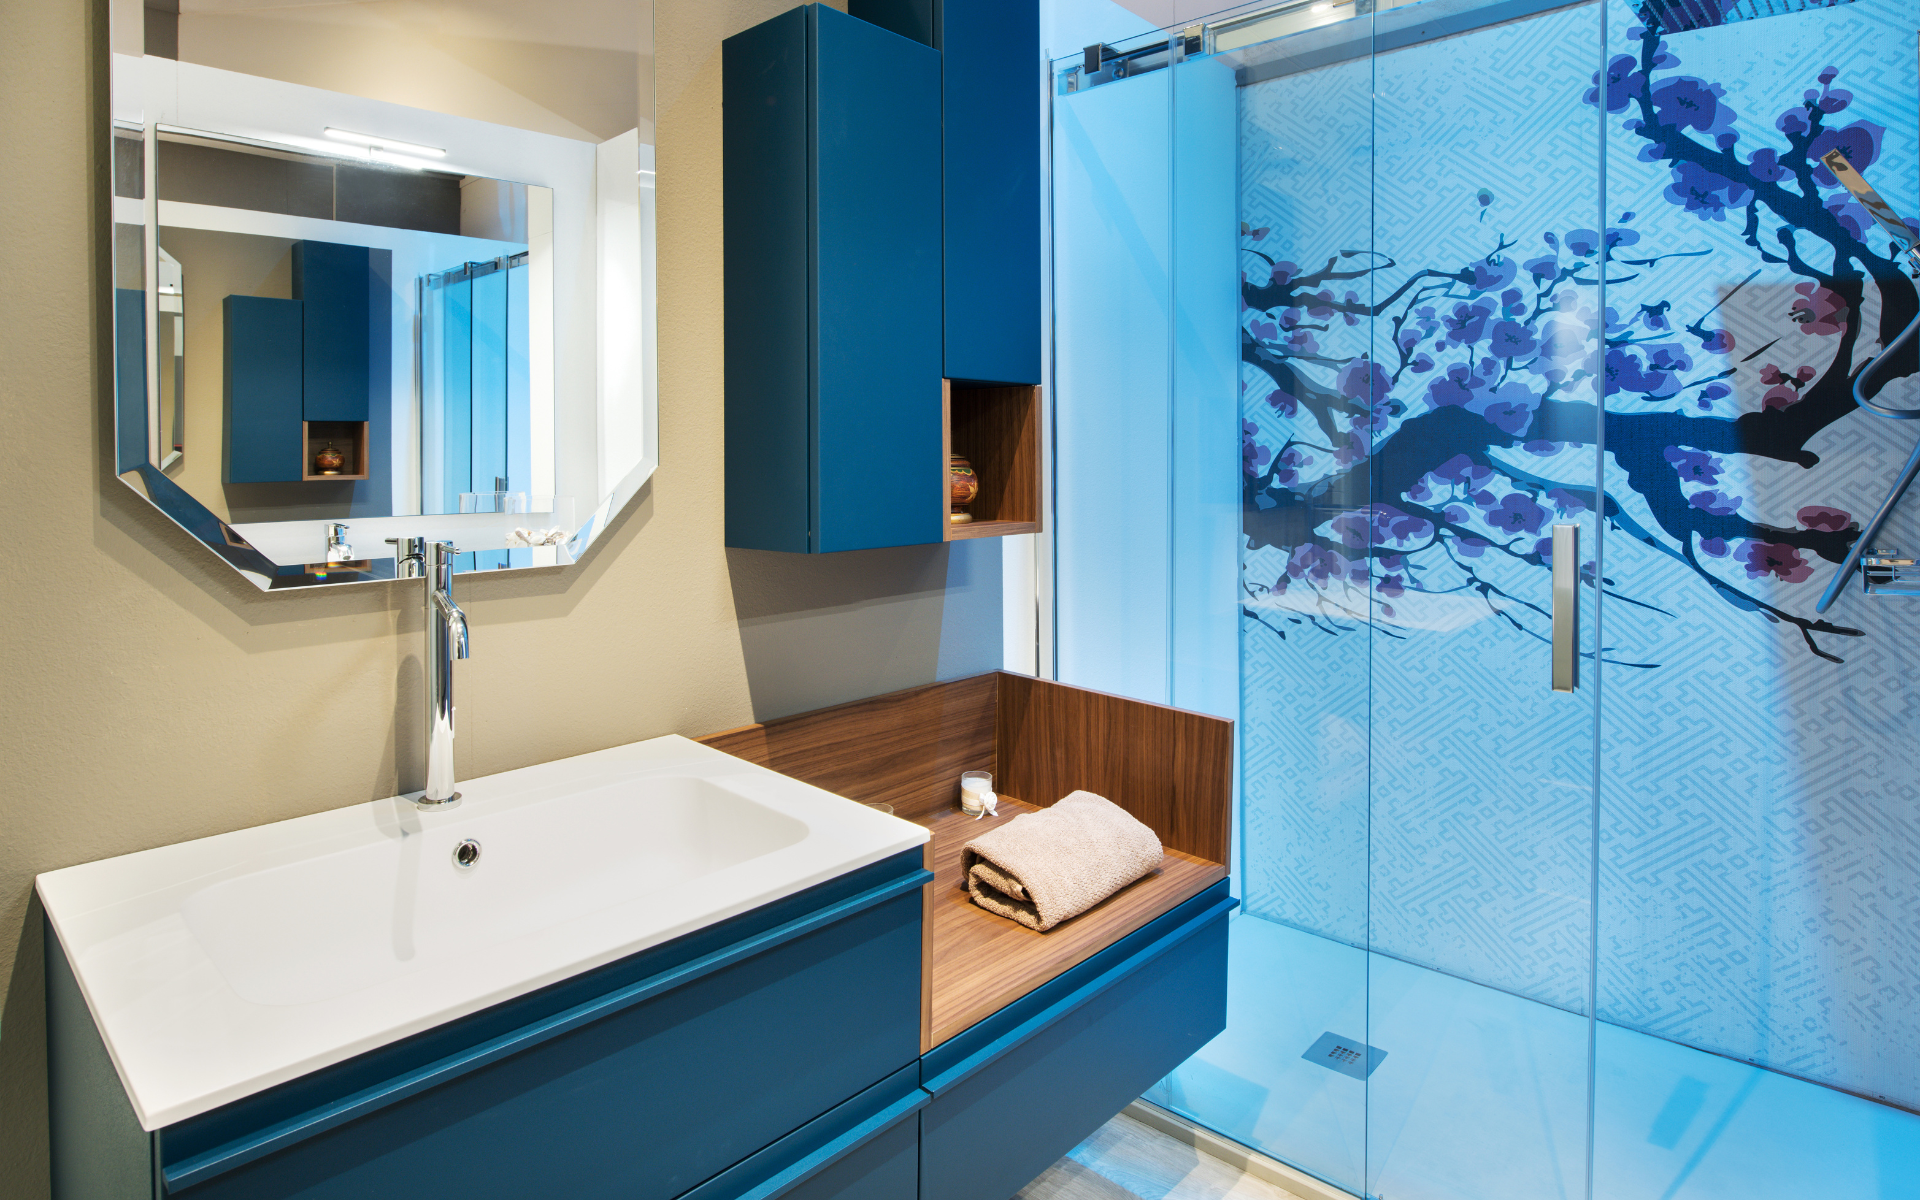 Relaxing bathroom with blue vanity